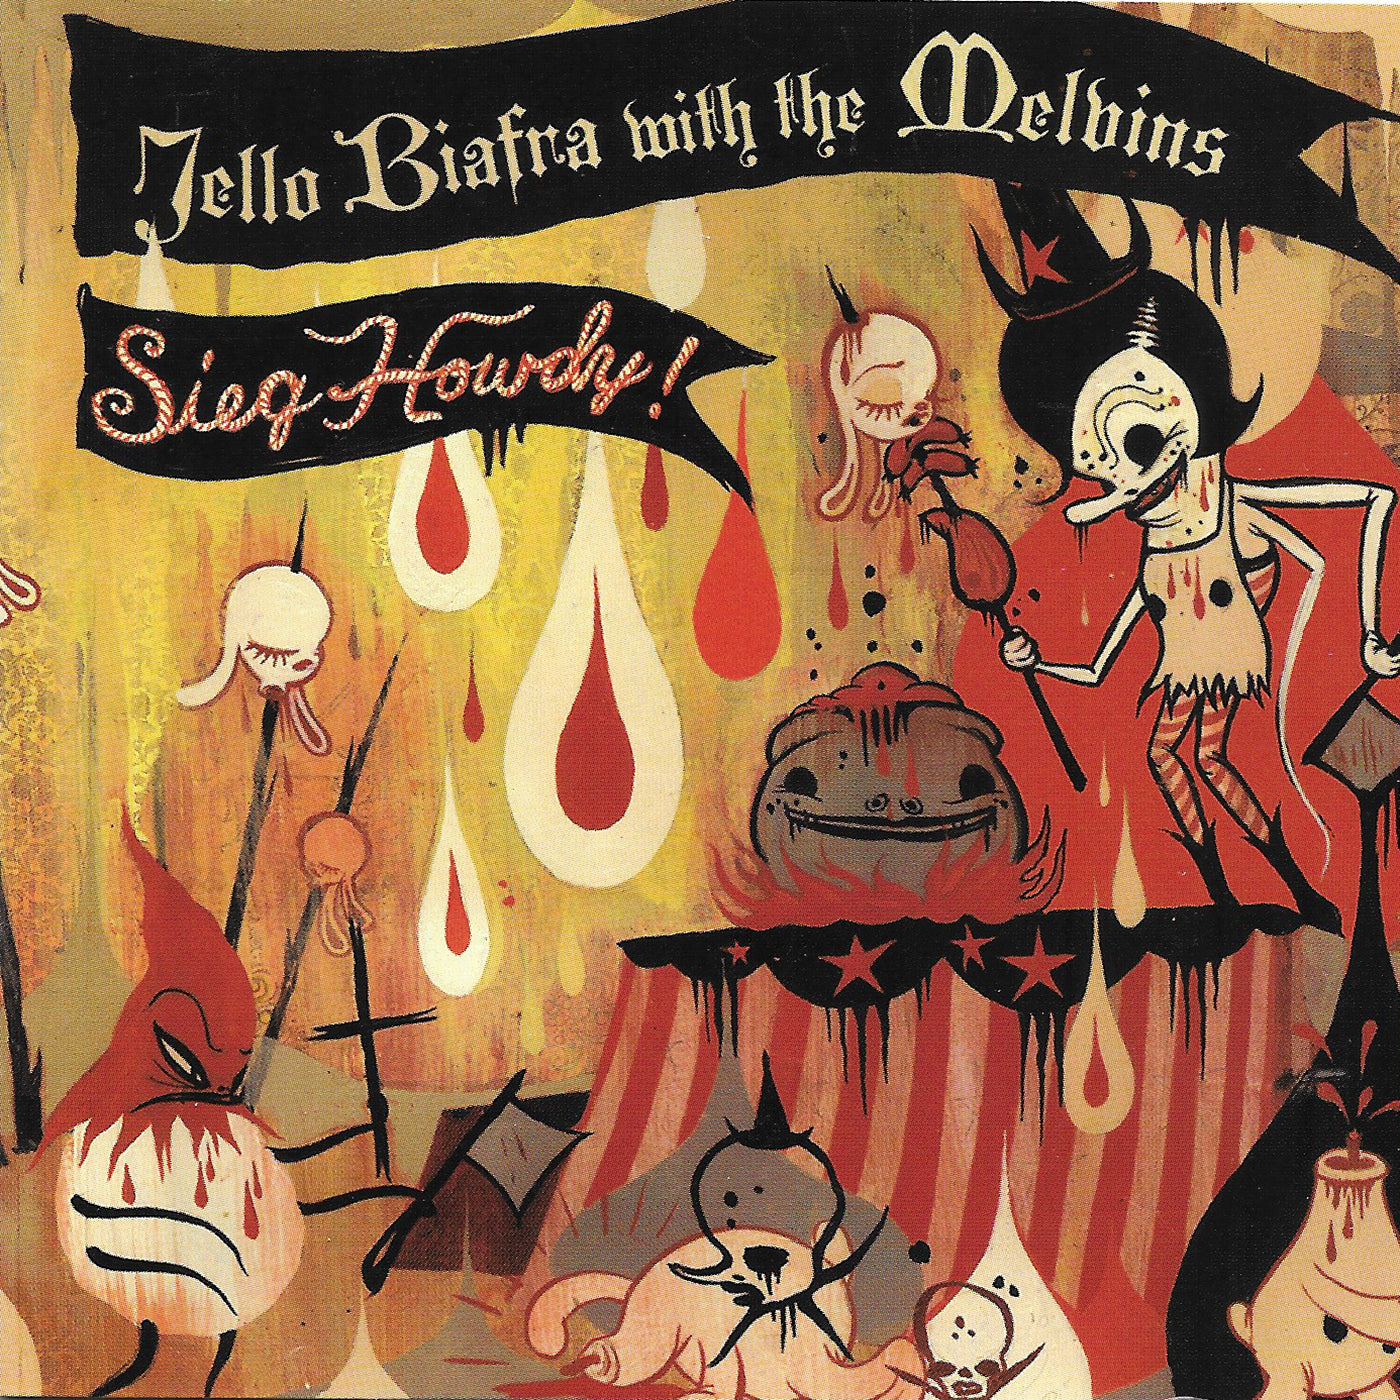 v350 - Jello Biafra With The Melvins - "Sieg Howdy!"